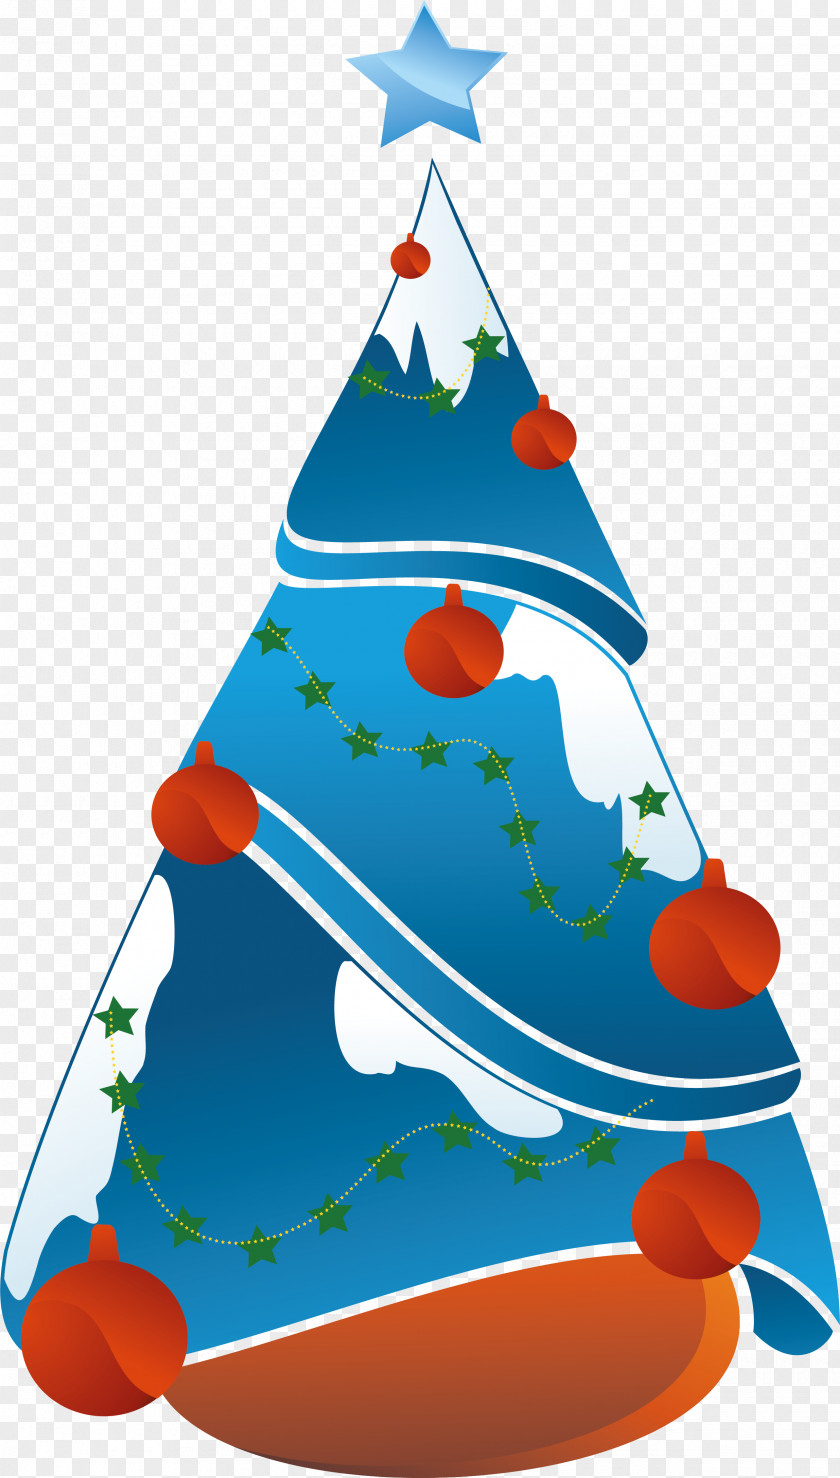 Exquisite Christmas Tree Design Santa Claus Clip Art PNG